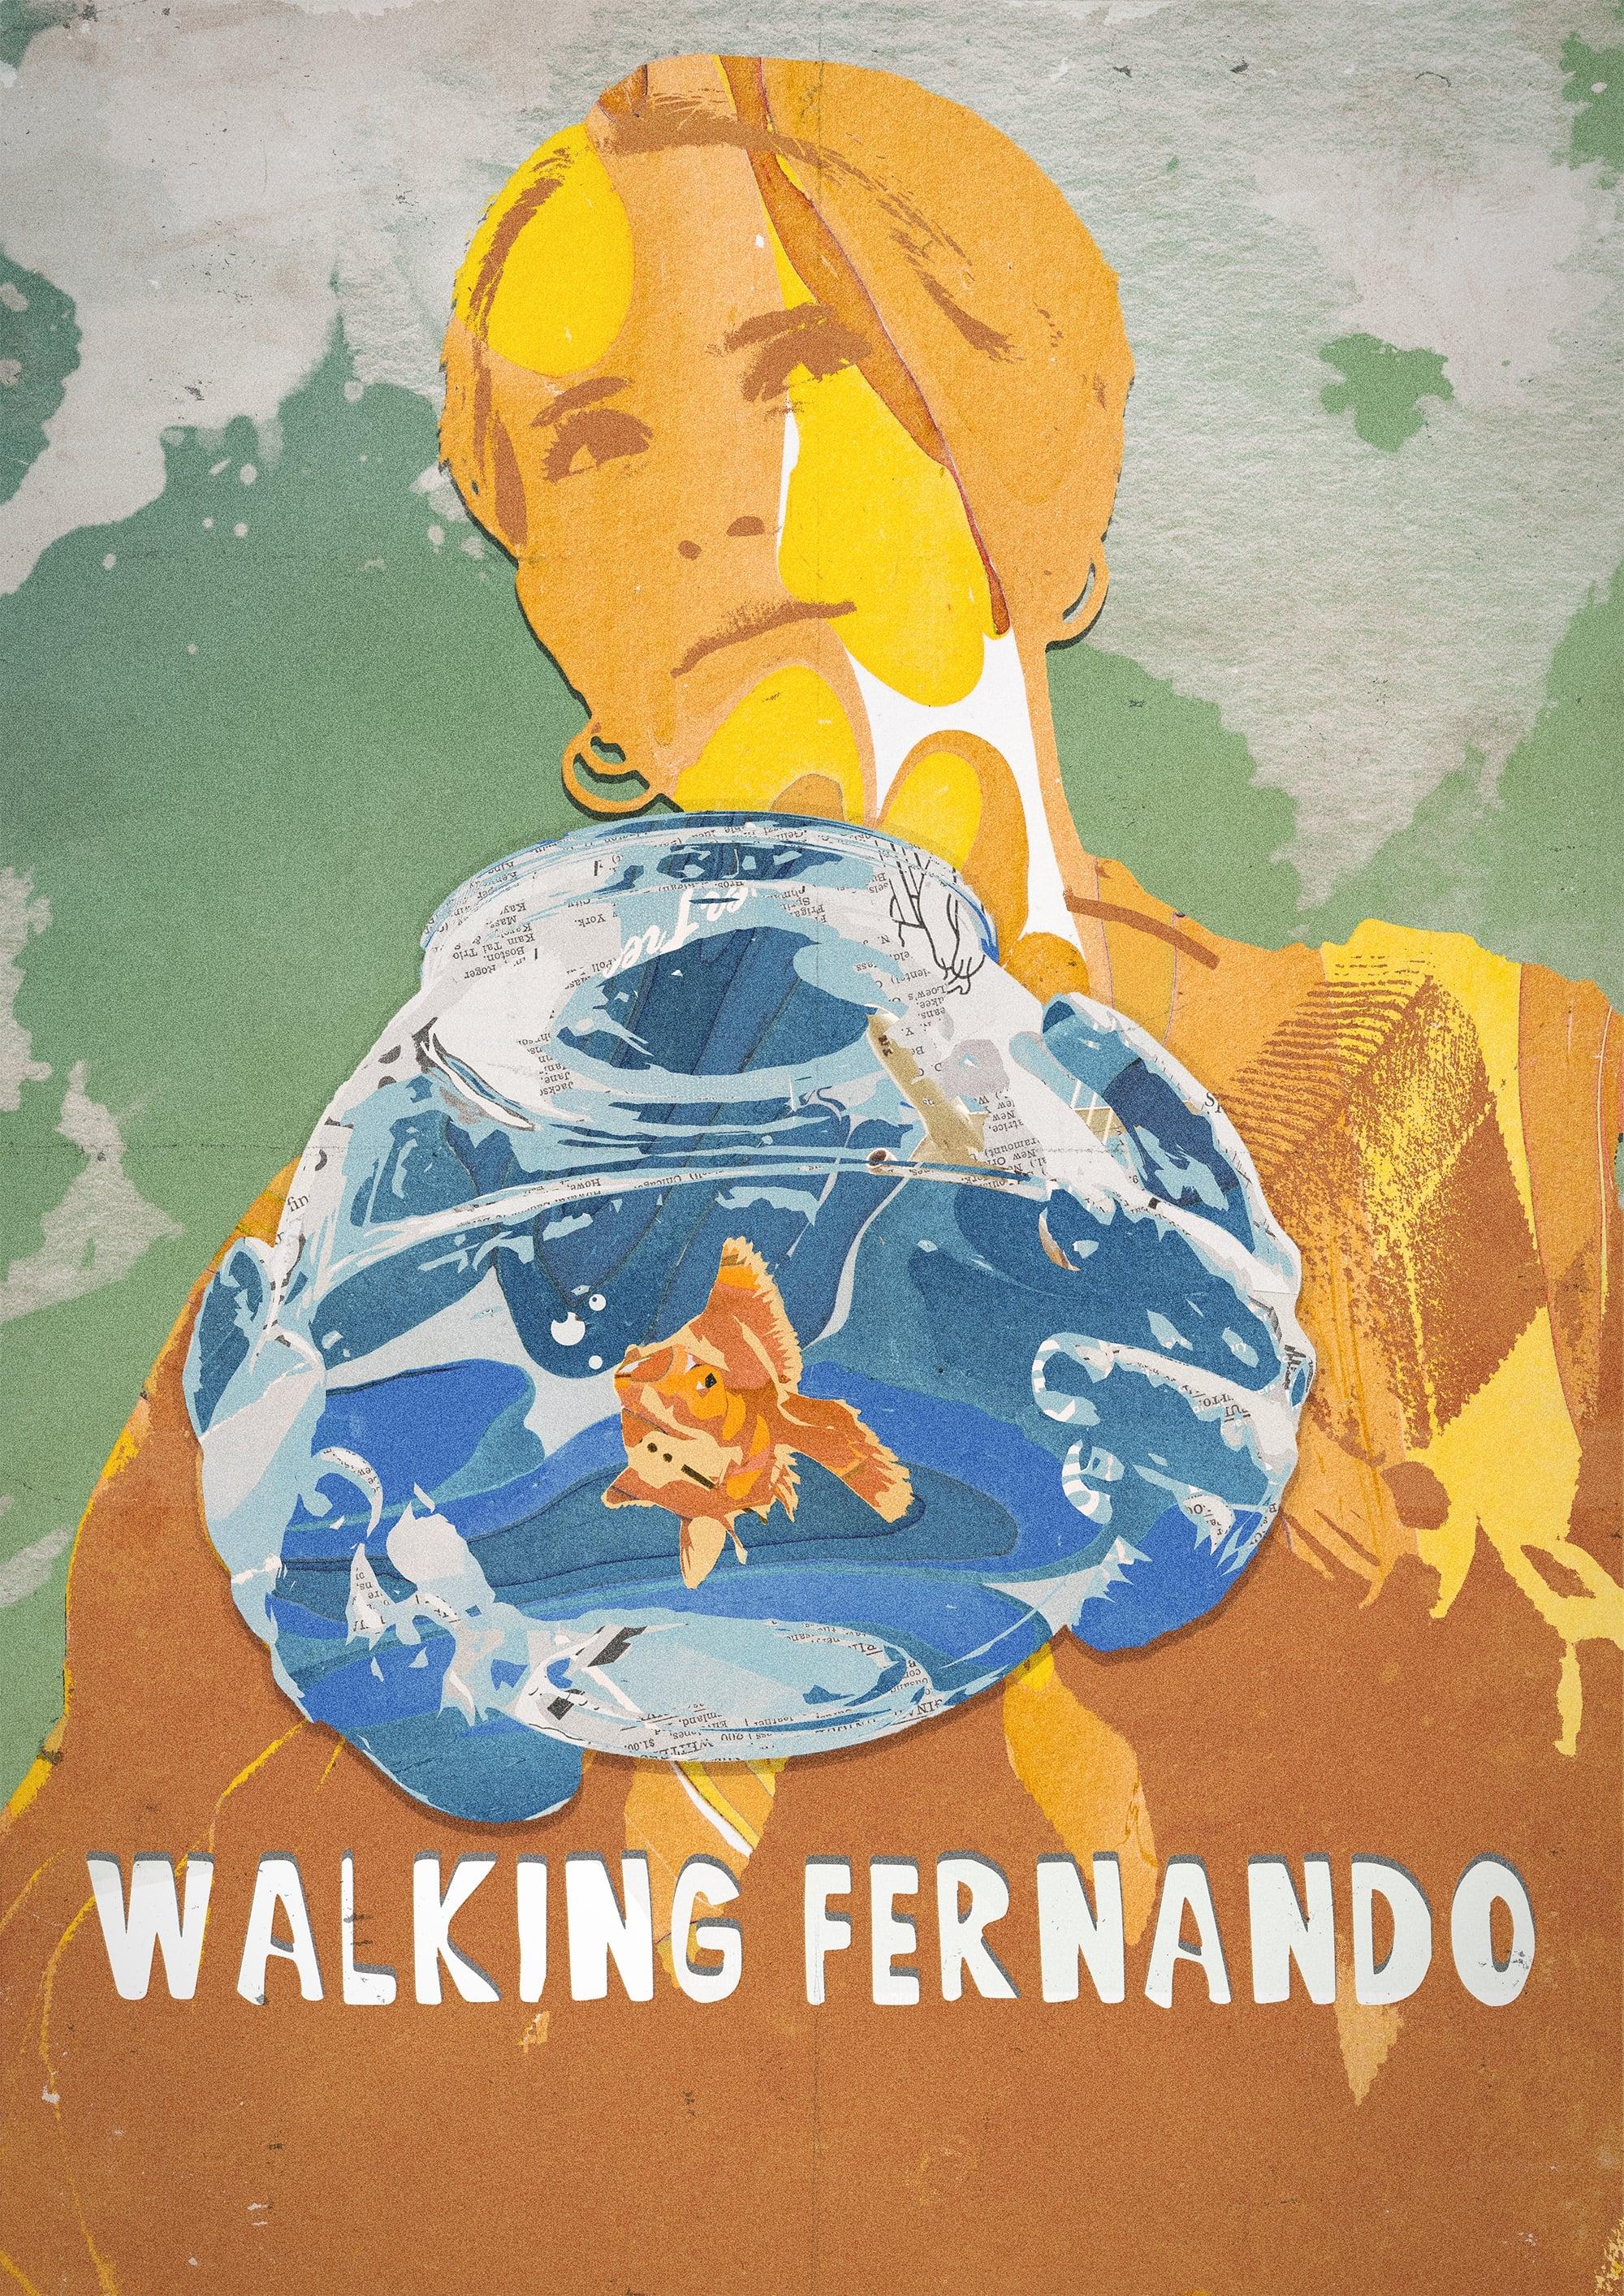 Walking Fernando poster